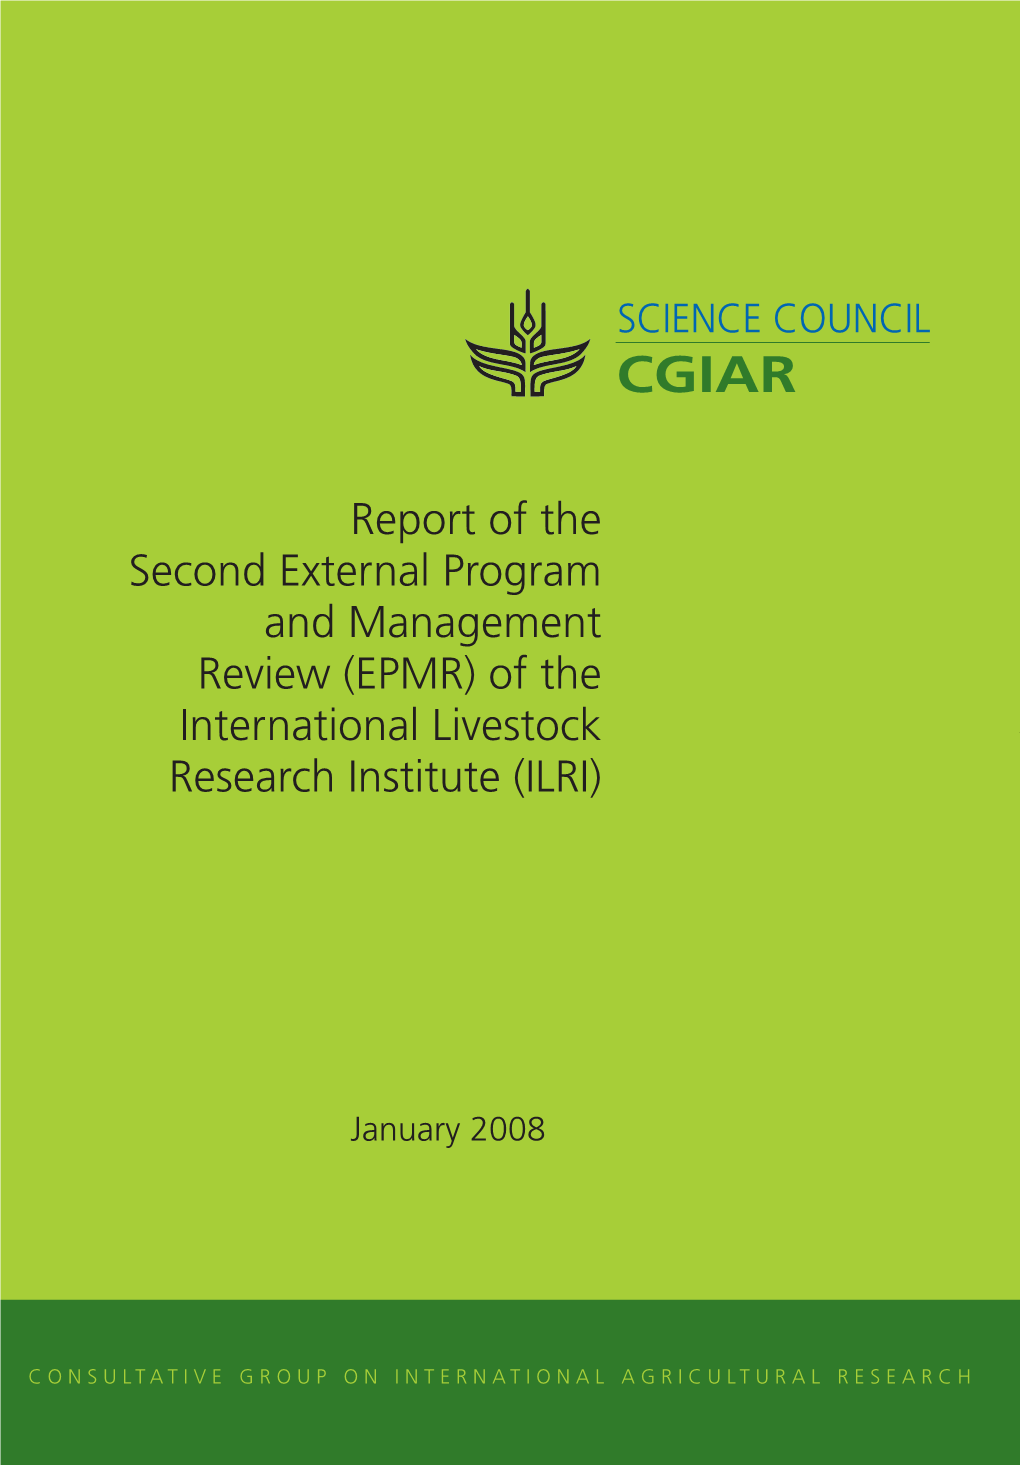 EPMR) of the International Livestock Research Institute (ILRI